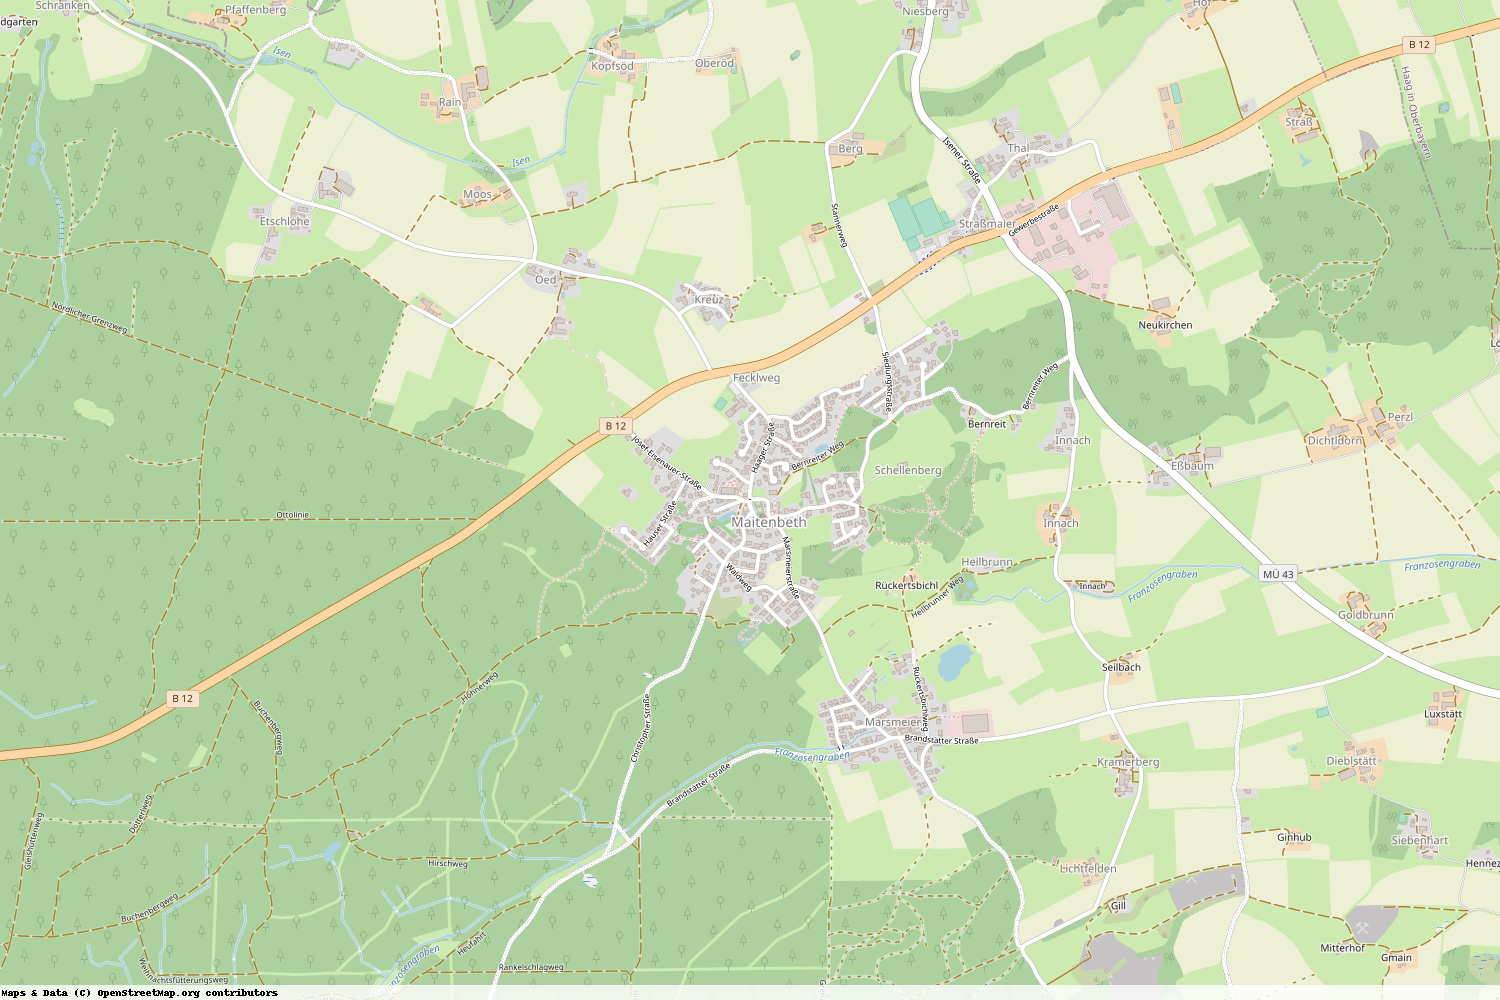 Ist gerade Stromausfall in Bayern - Mühldorf a. Inn - Maitenbeth?